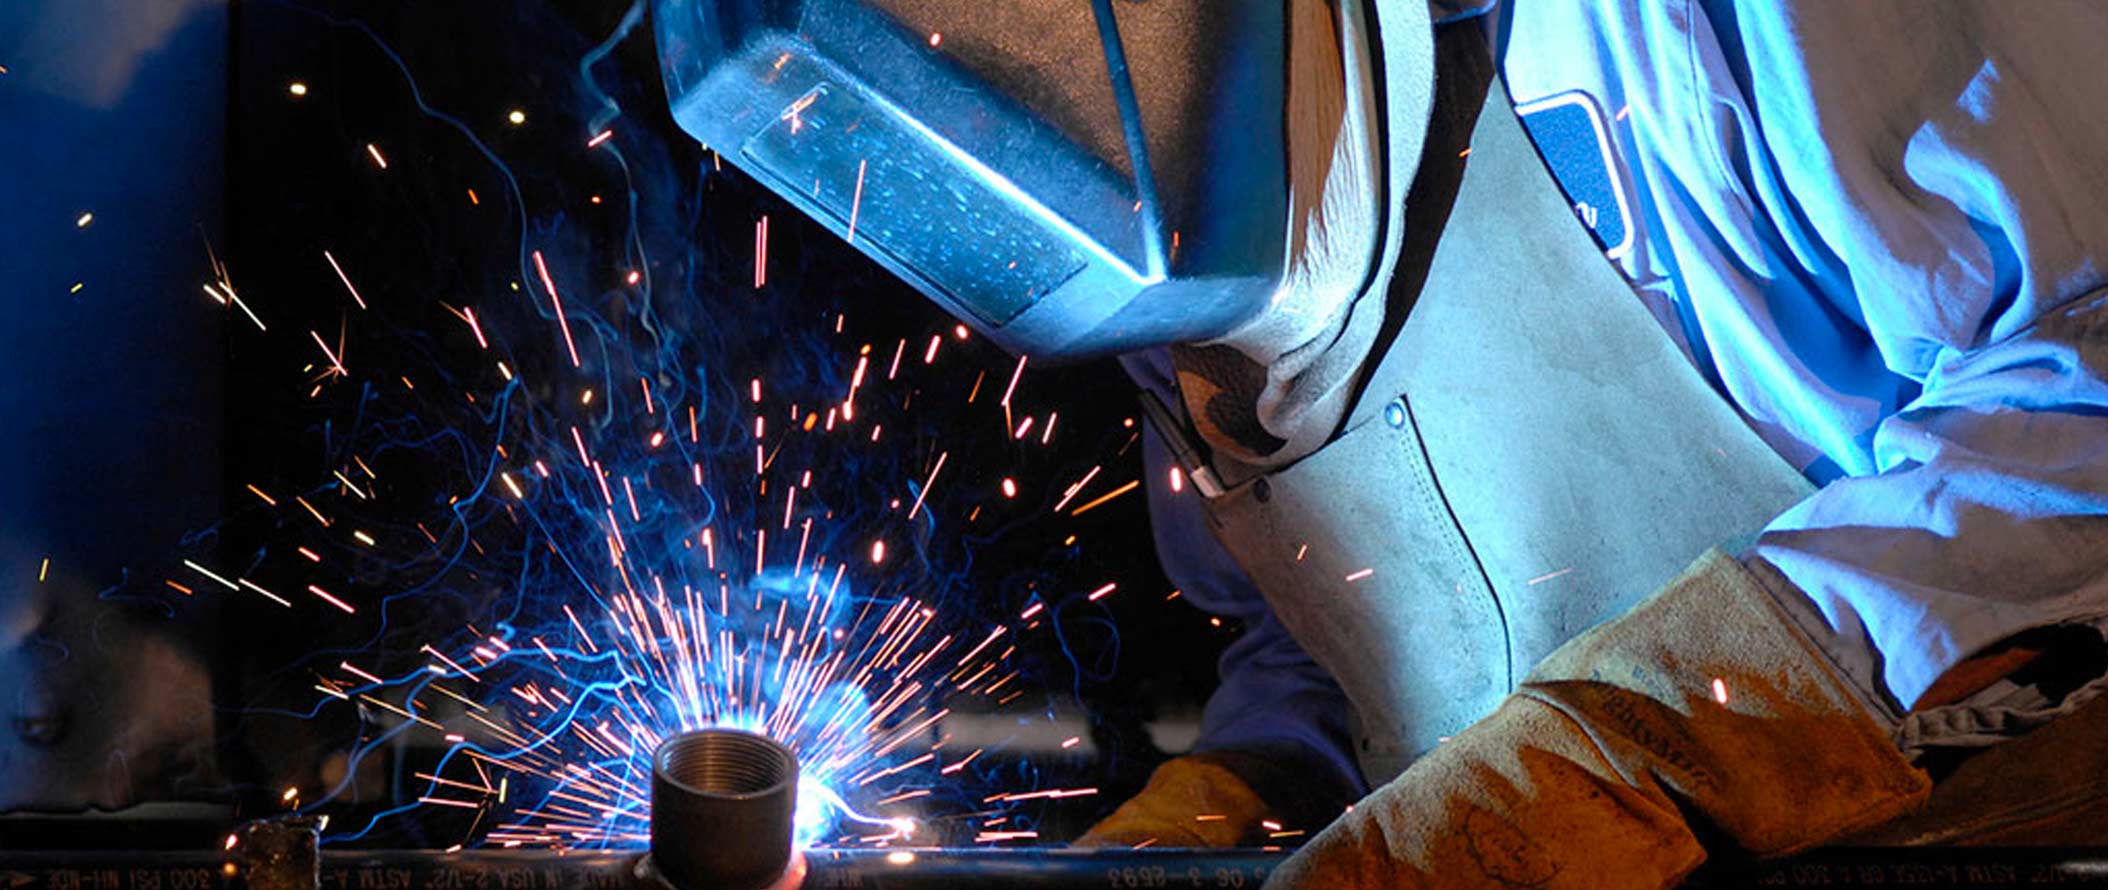 blog-mfg-manufacturing-welding-man.jpg